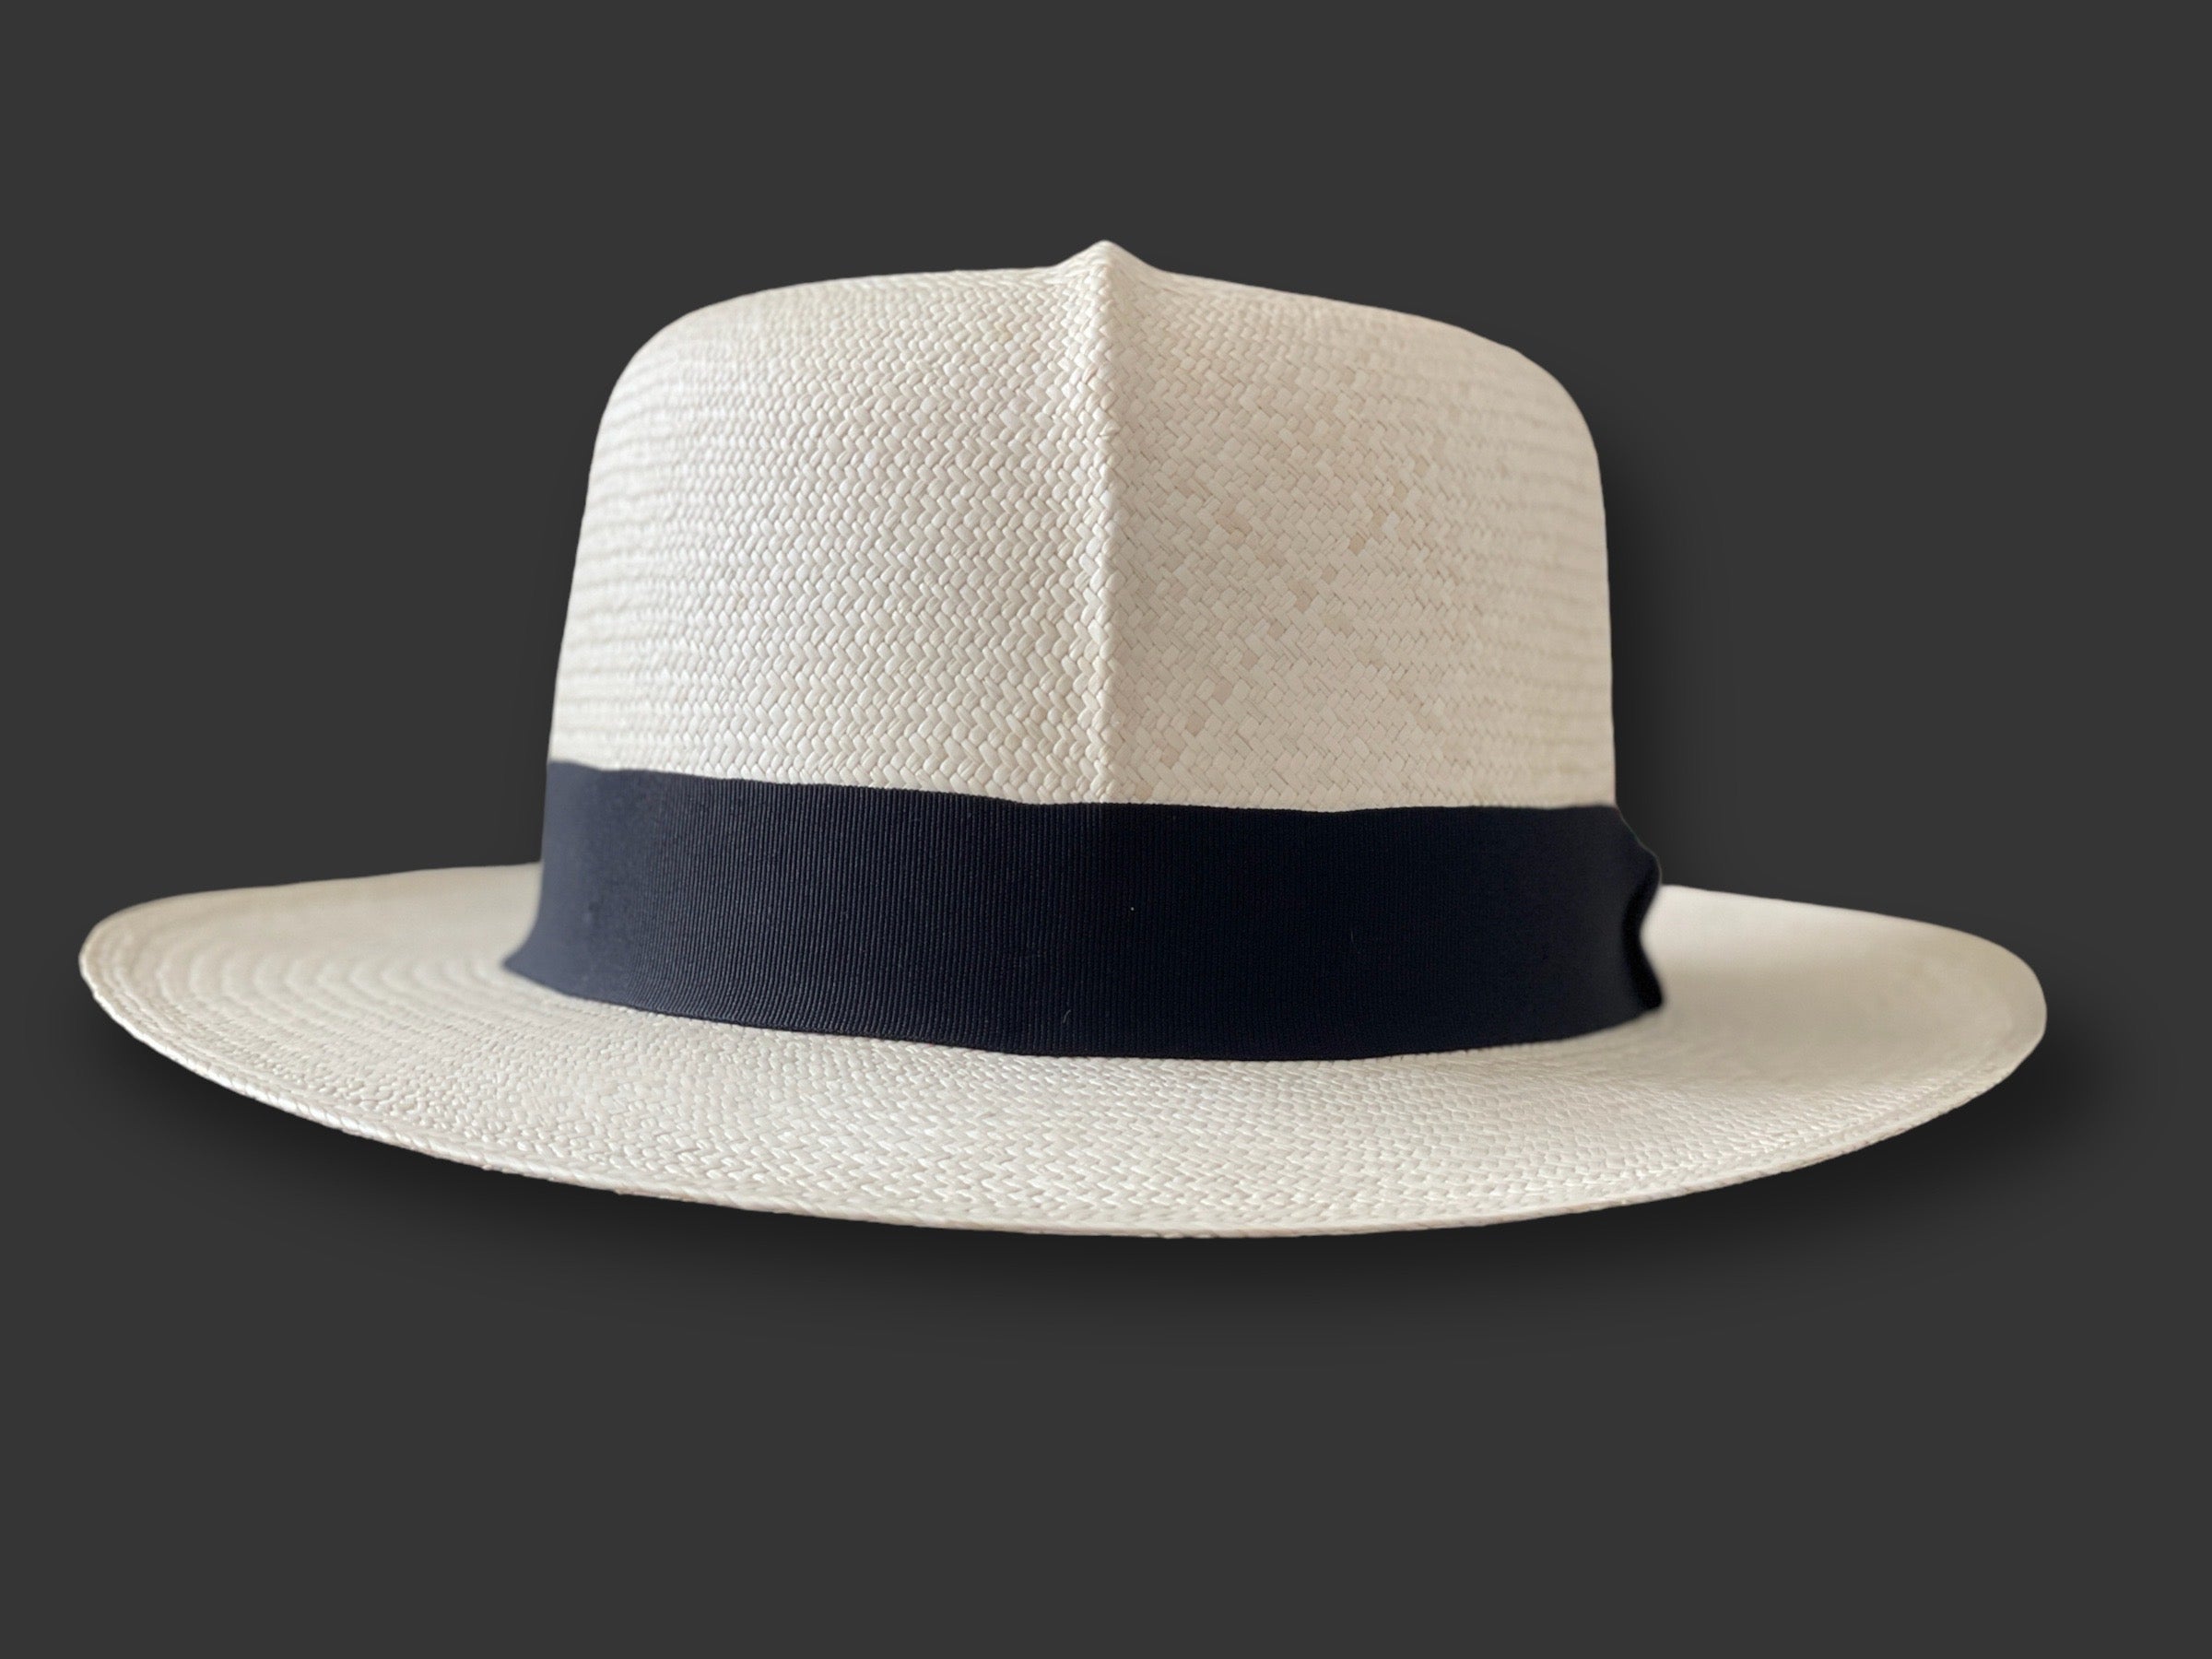 Genuine Panama hat from Ecuador model Optimo